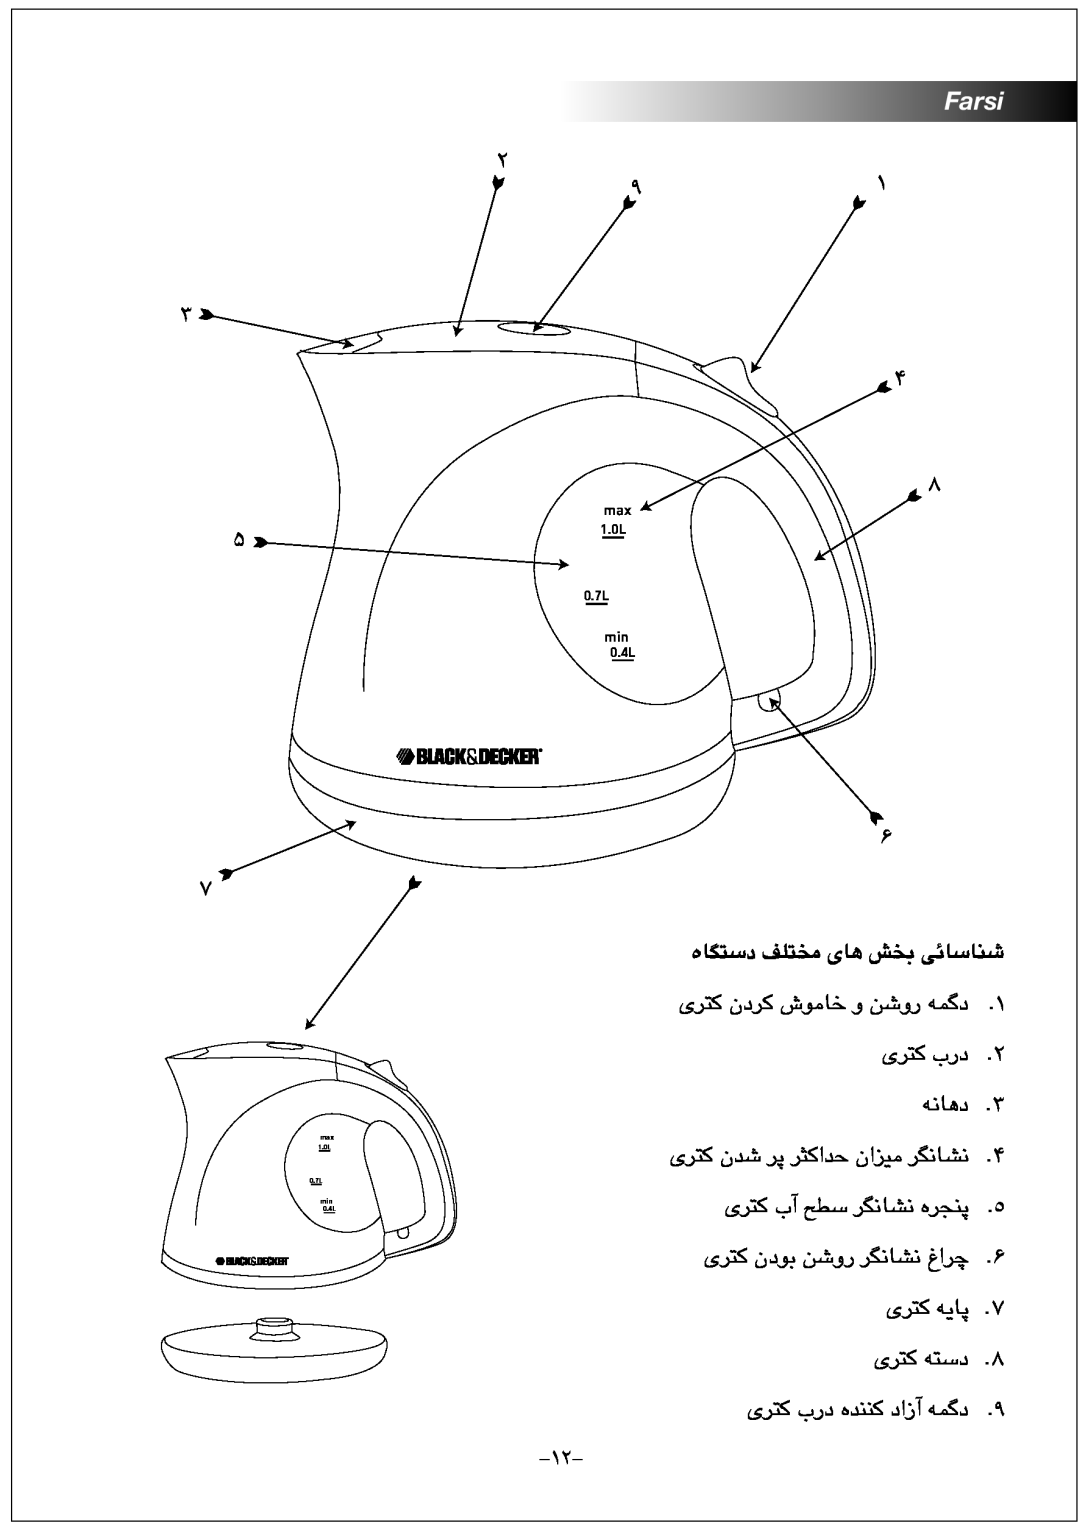 Black & Decker JC100 manual Farsi, ﻩﺎﮕﺘﺳﺩ ﻒﻠﺘﺨﻣ ﯼﺎﻫ ﺶﺨﺑ ﯽﺋﺎﺳﺎﻨﺷ, max 1.0L 0.7L min 0.4L 